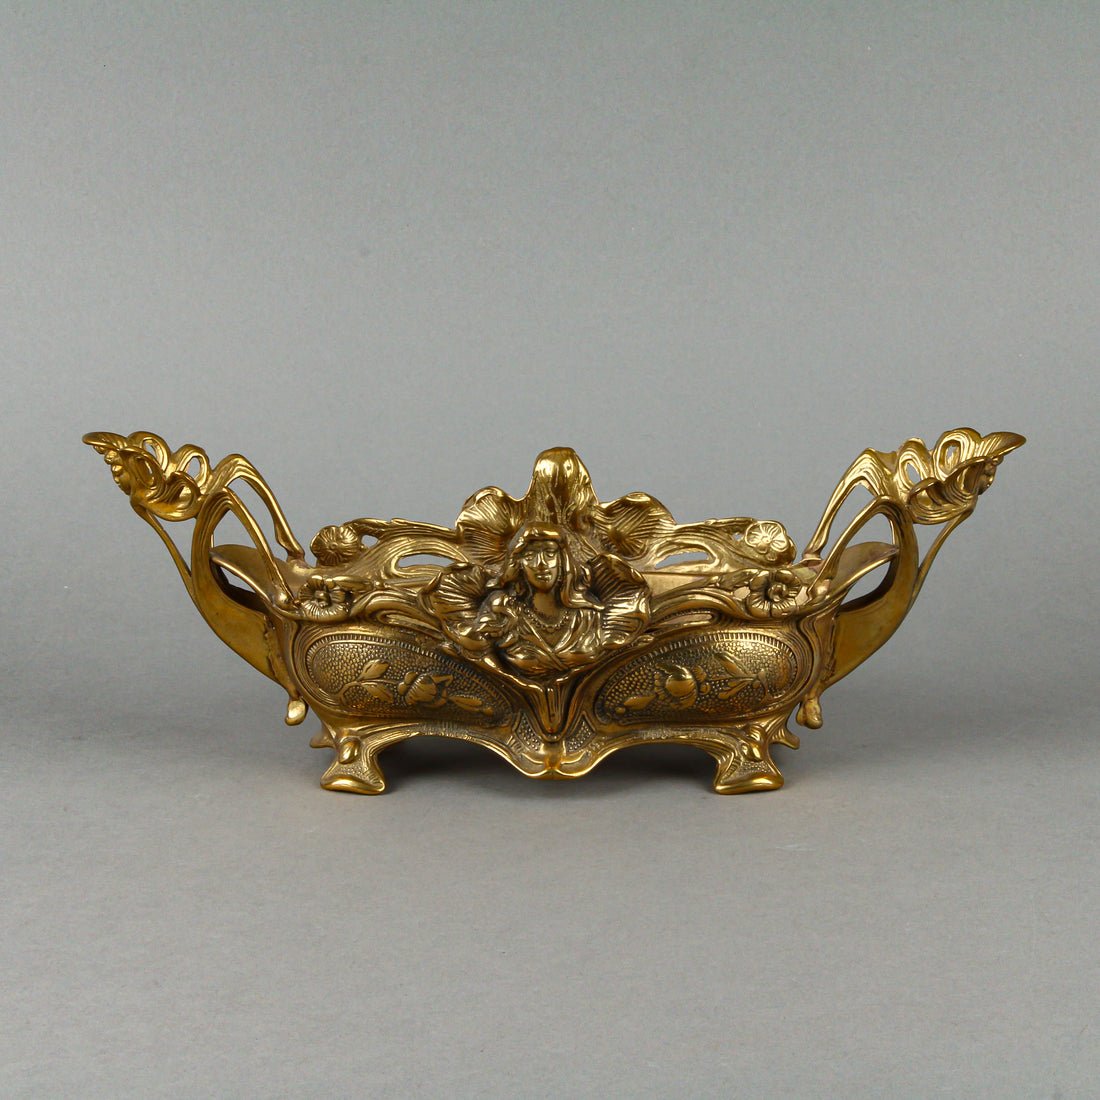 Cast Brass/Bronze Art Nouveau Jardiniere with Insert